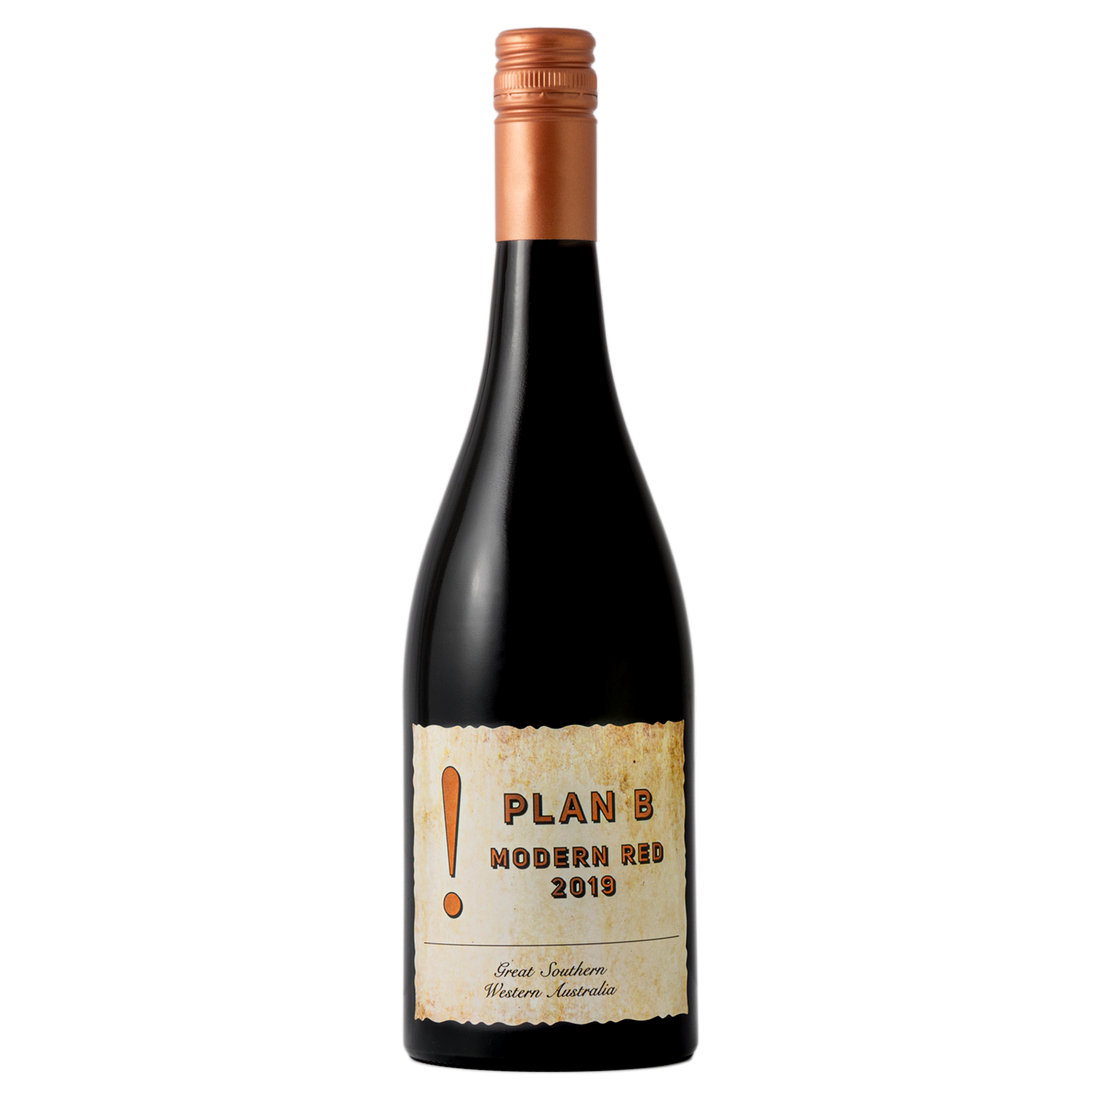 Plan B! ‘Modern Red’ Shiraz-Pinot Noir 2019 Red Wine – Great Southern, Western Australia